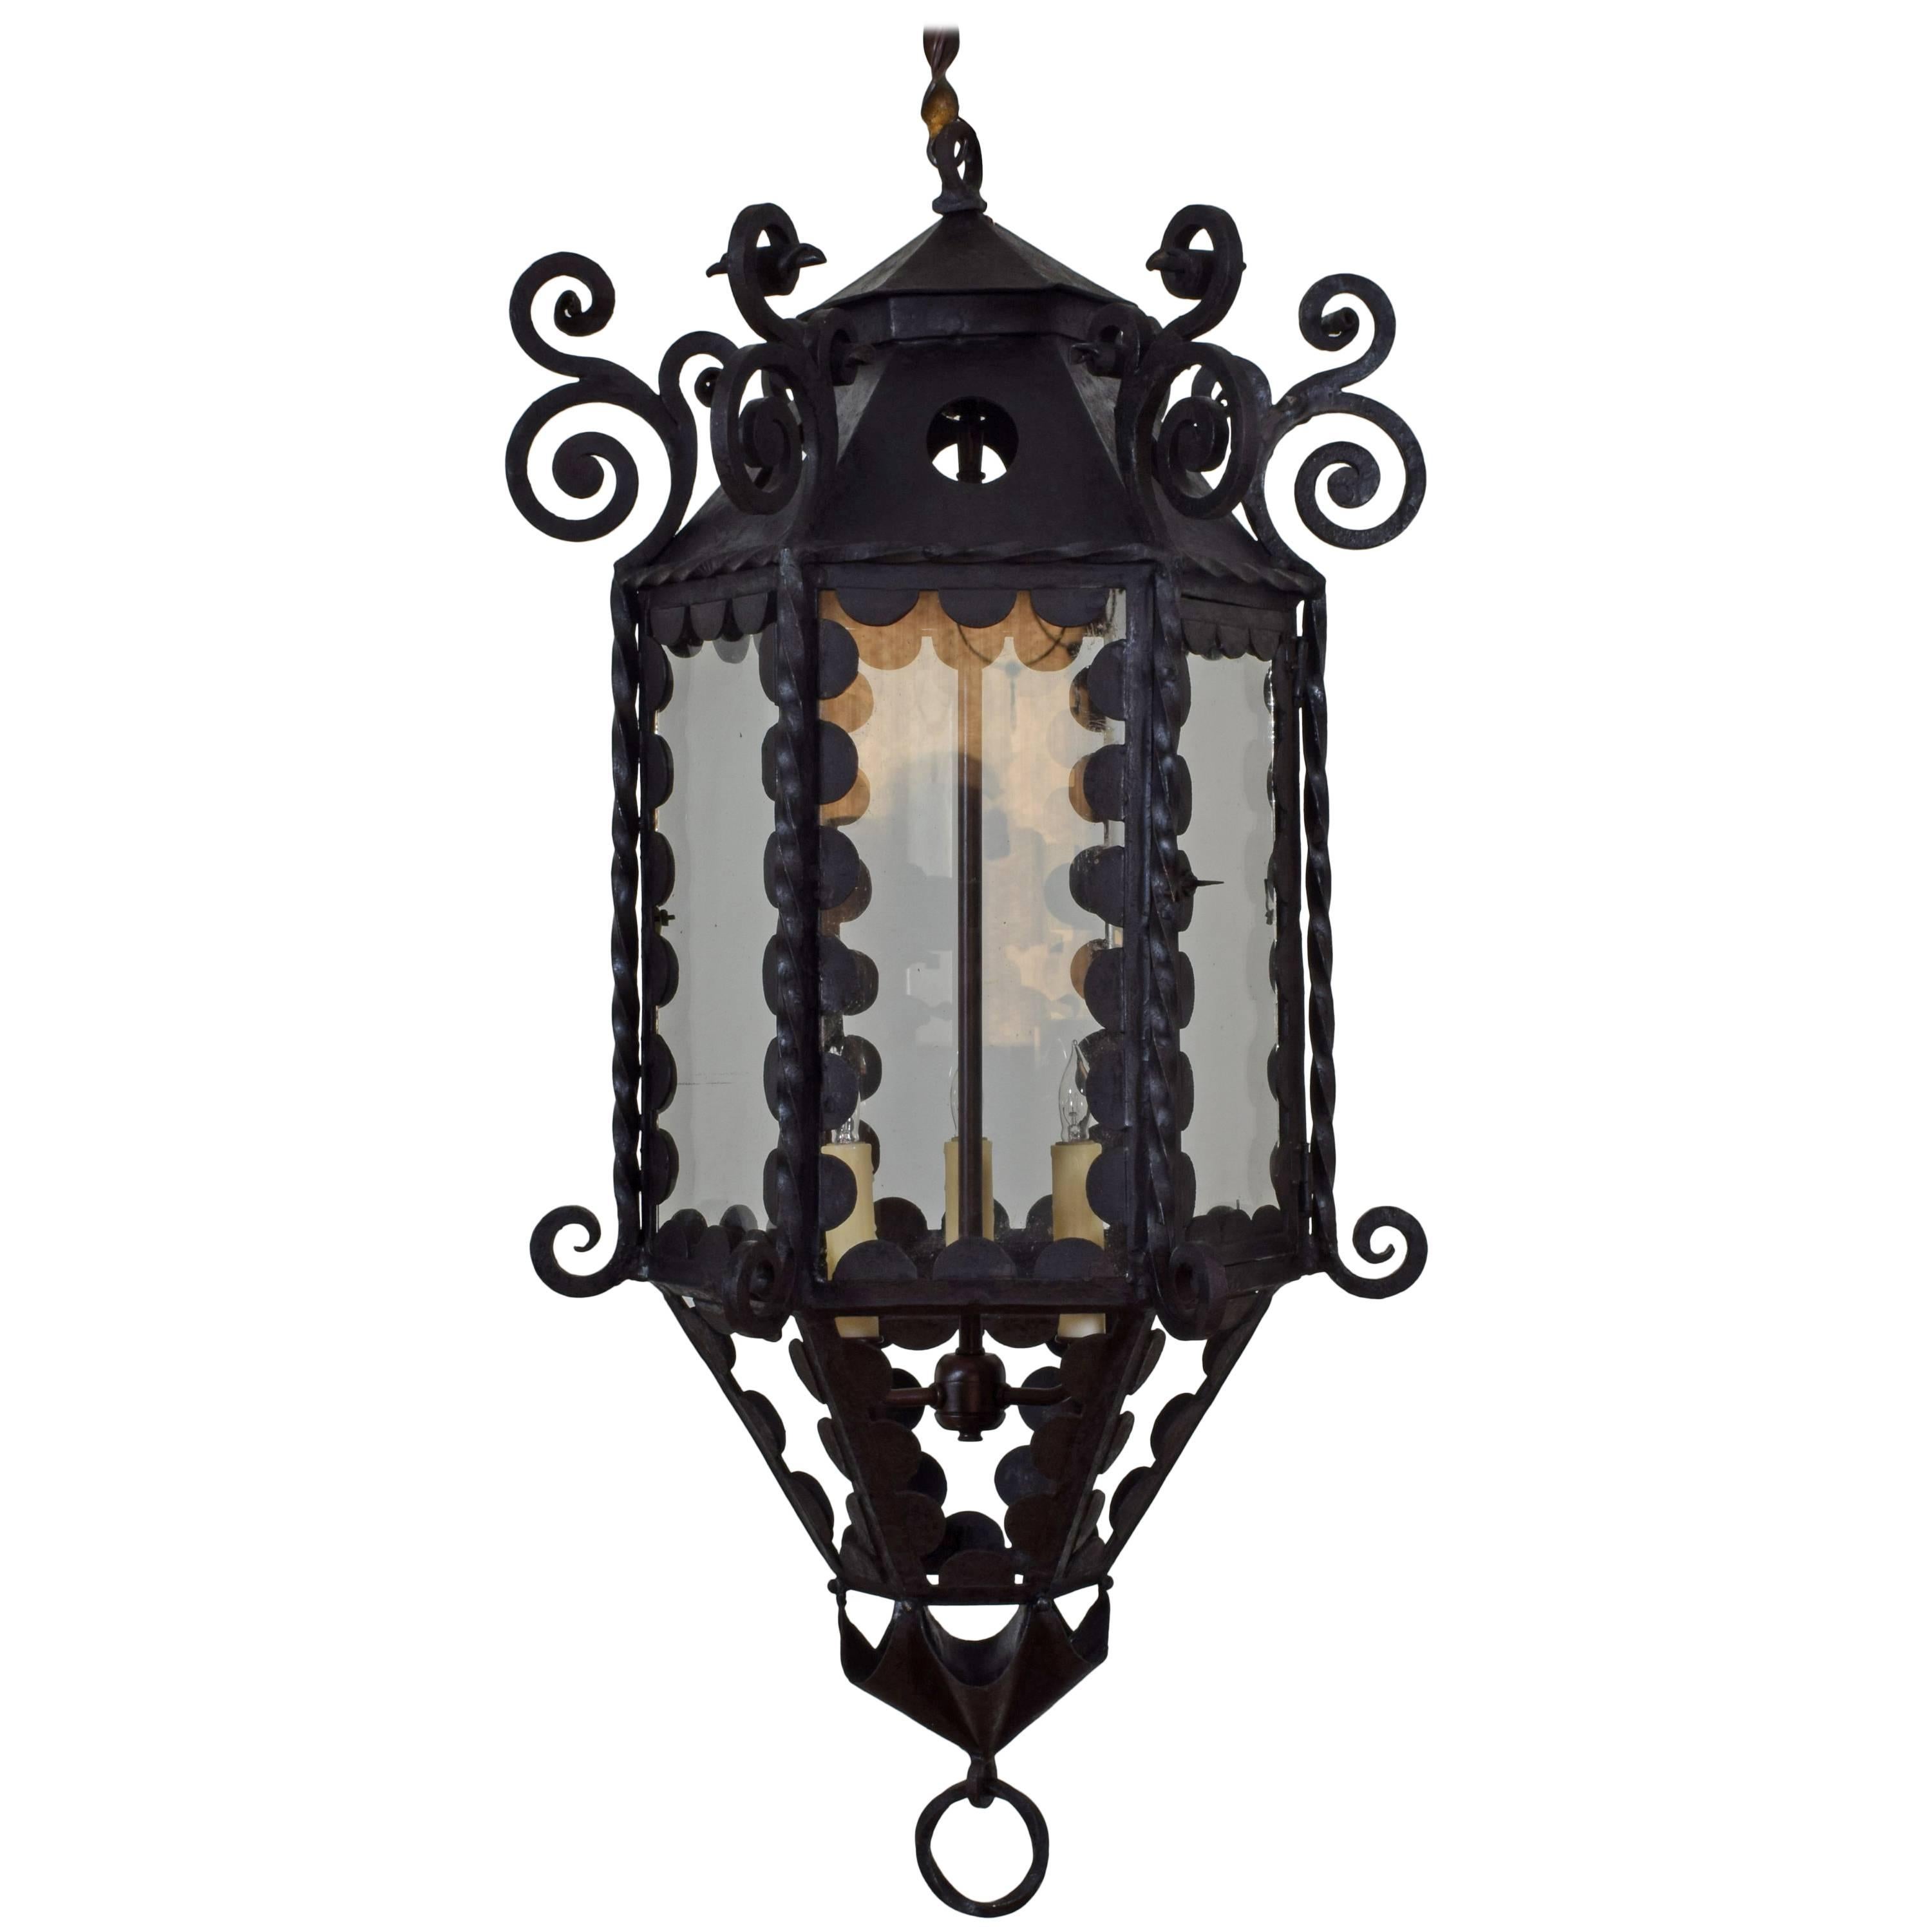 Italian Wrought Iron, Metal, and Glass Baroque Style Lantern, 19th Century